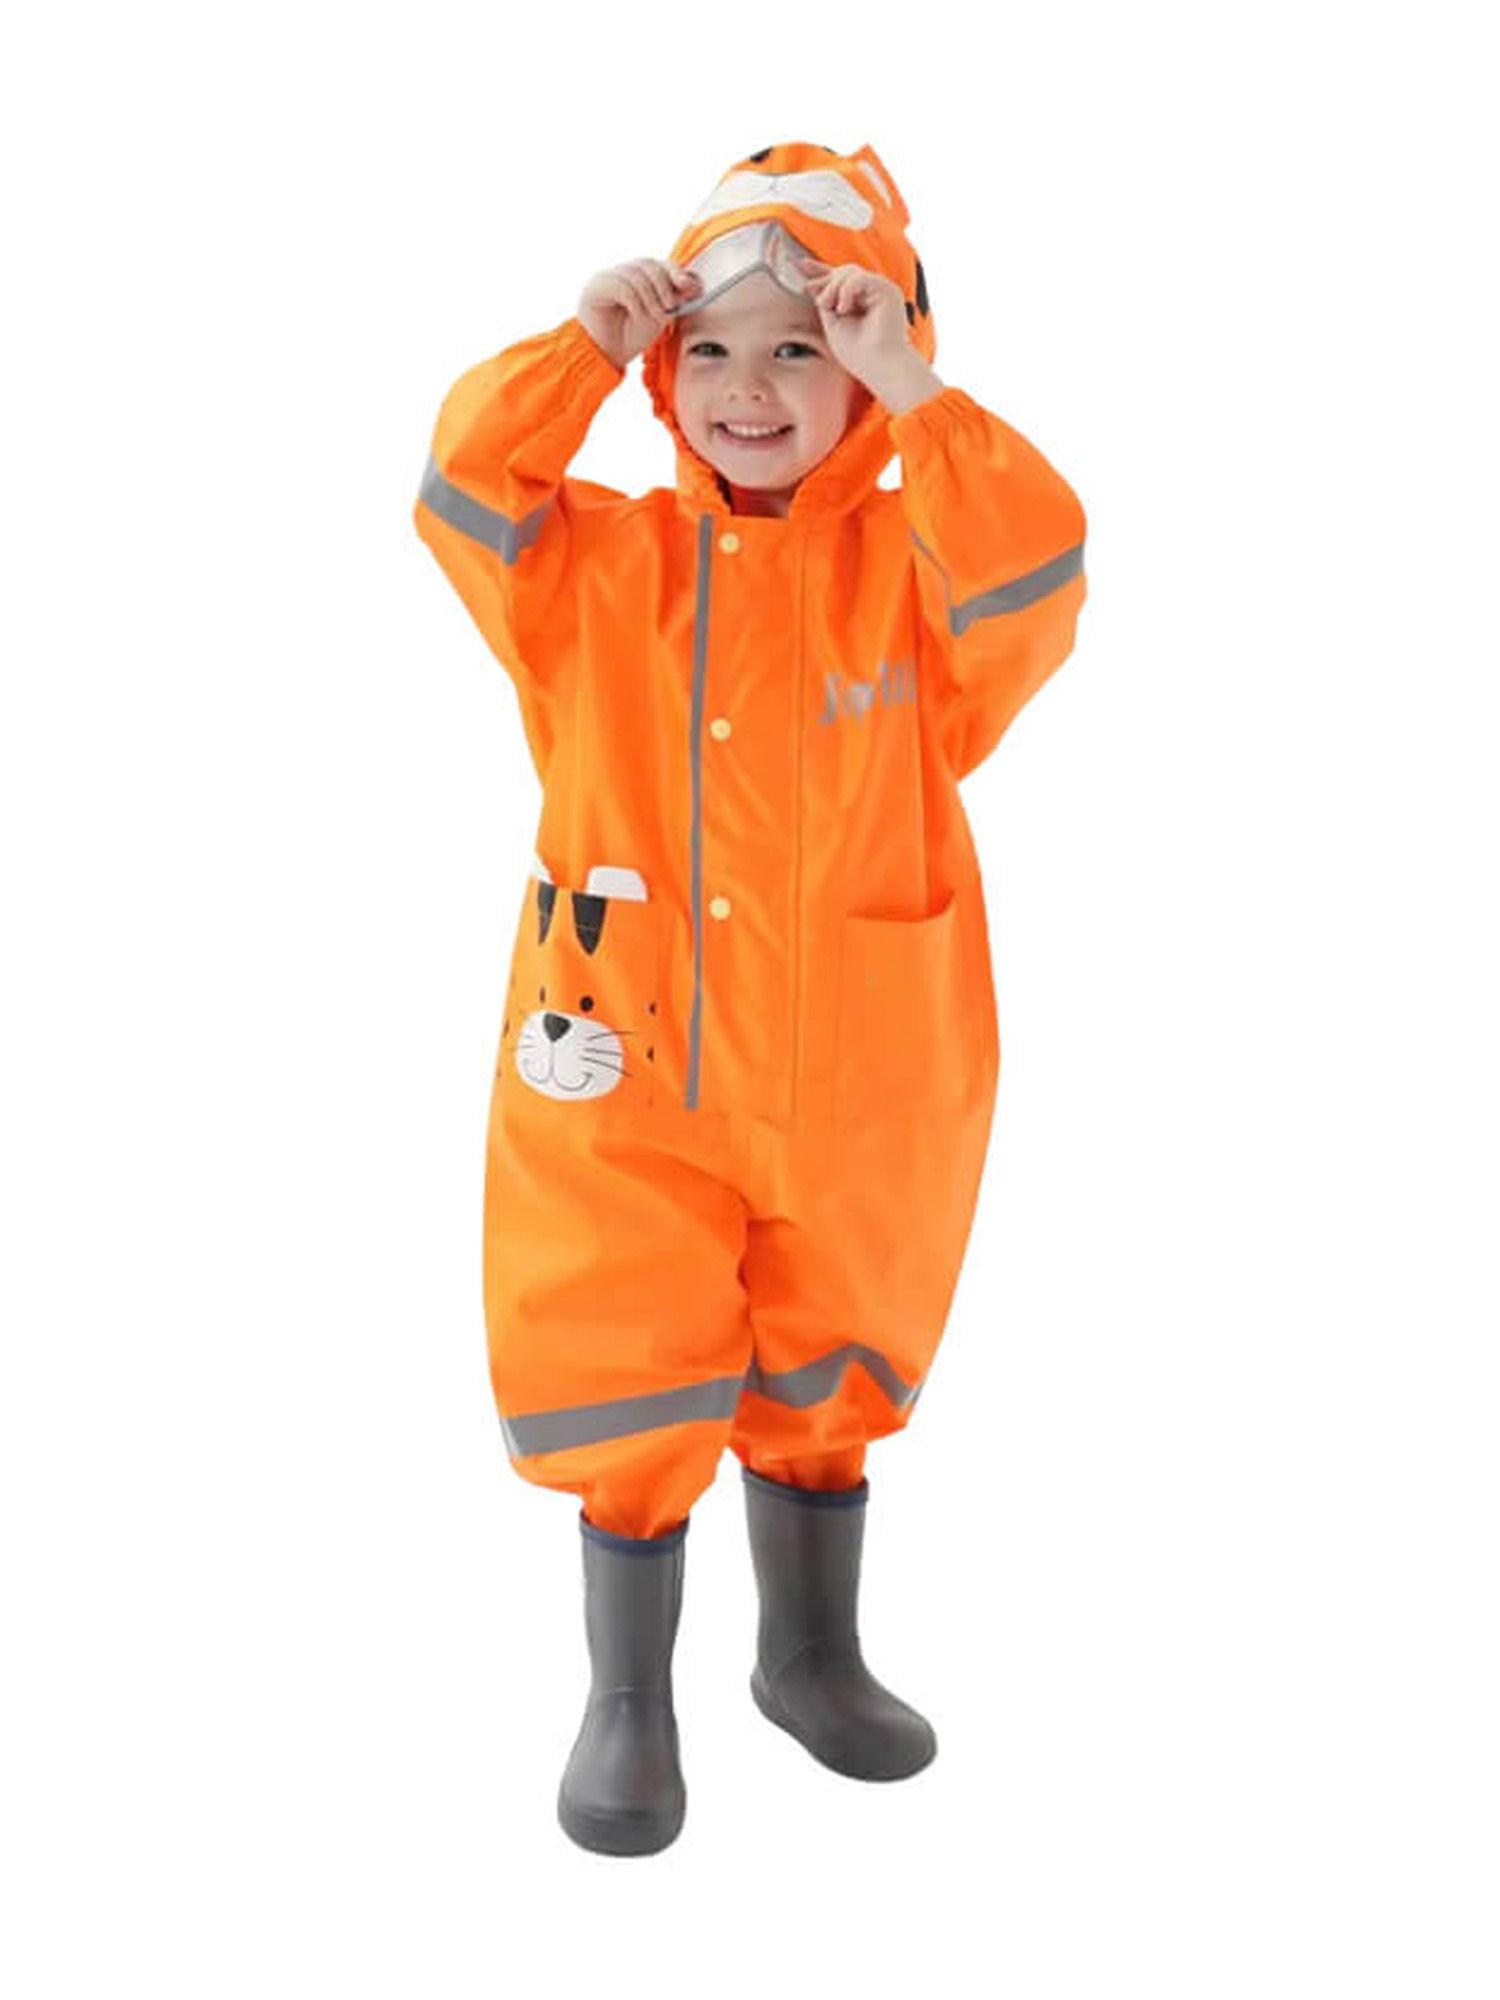 raincoat for kids bright orange roaring tiger theme